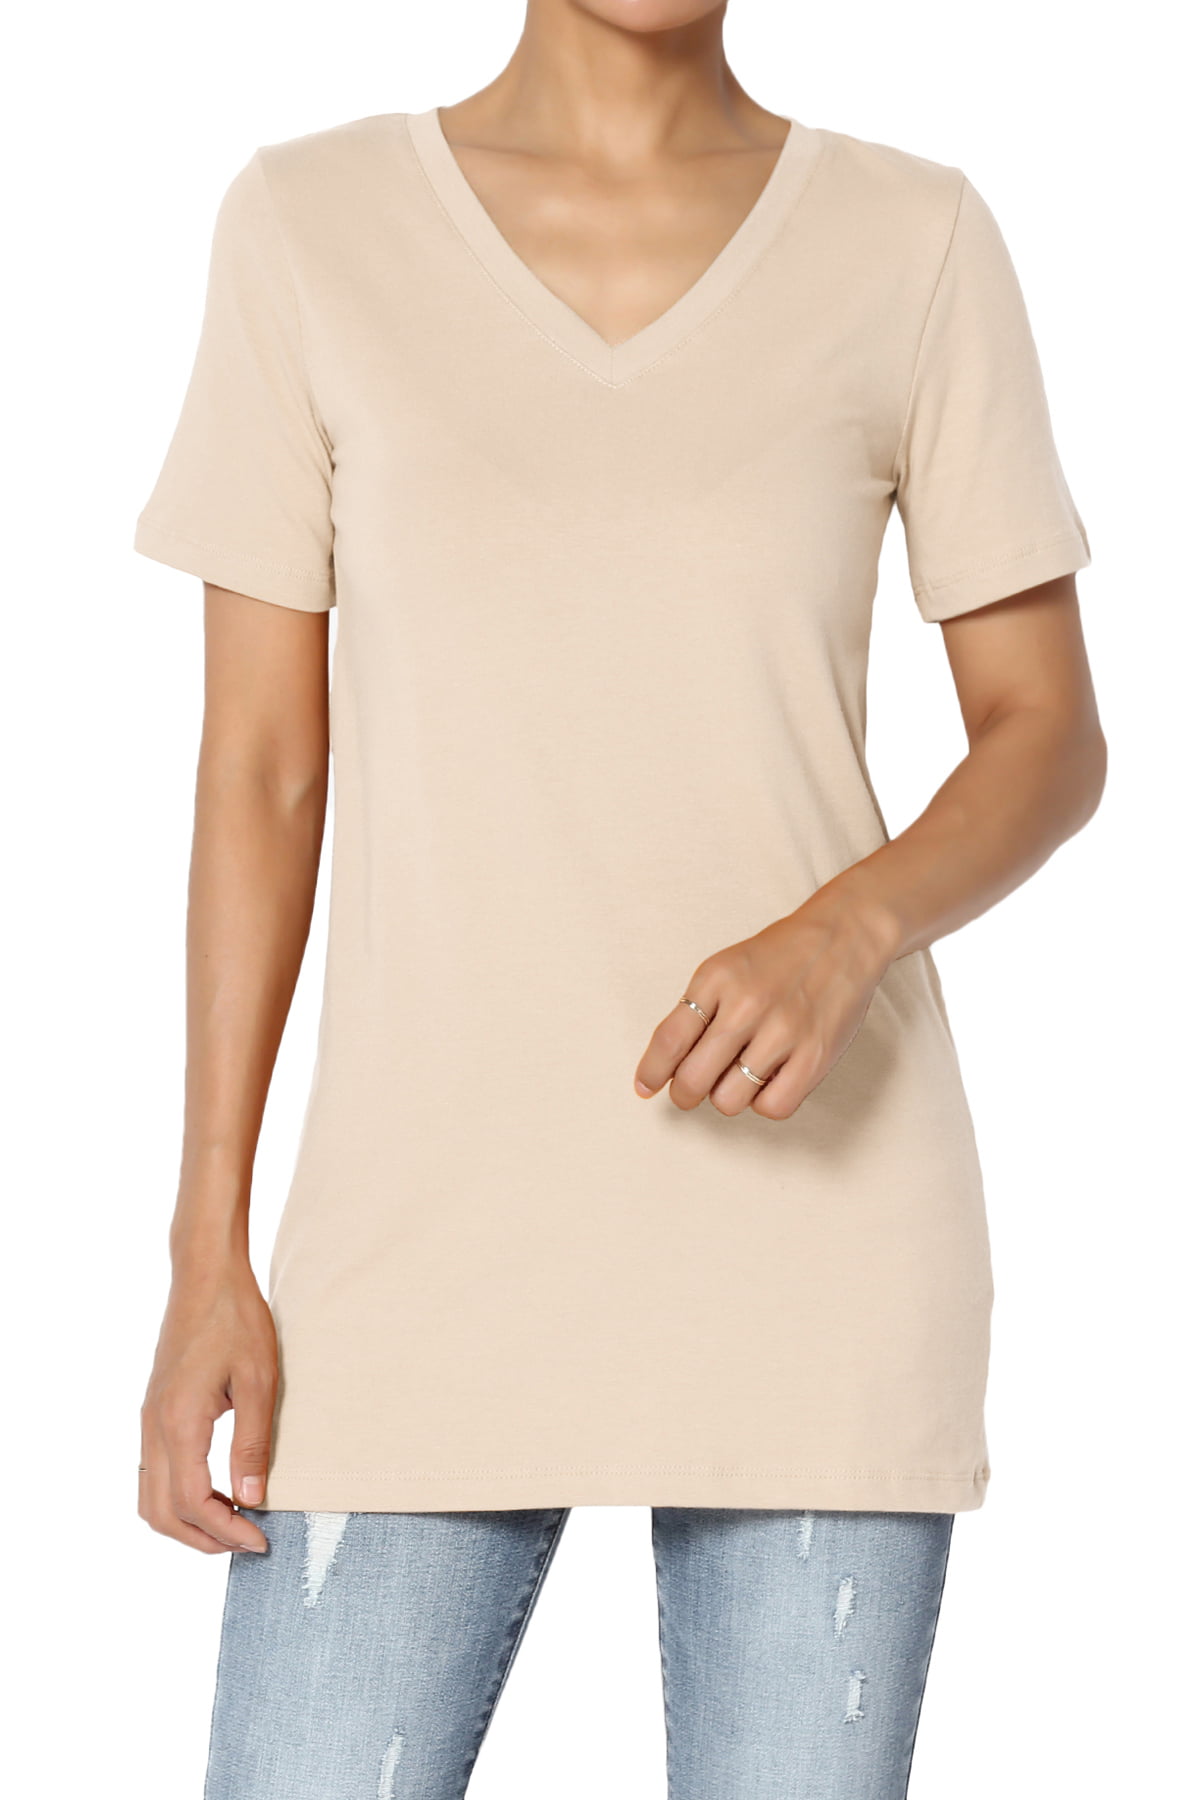 TheMogan S~3X Mock Neck Long Sleeve Shirttail Hem Jersey Top Relaxed Fit T-Shirt 